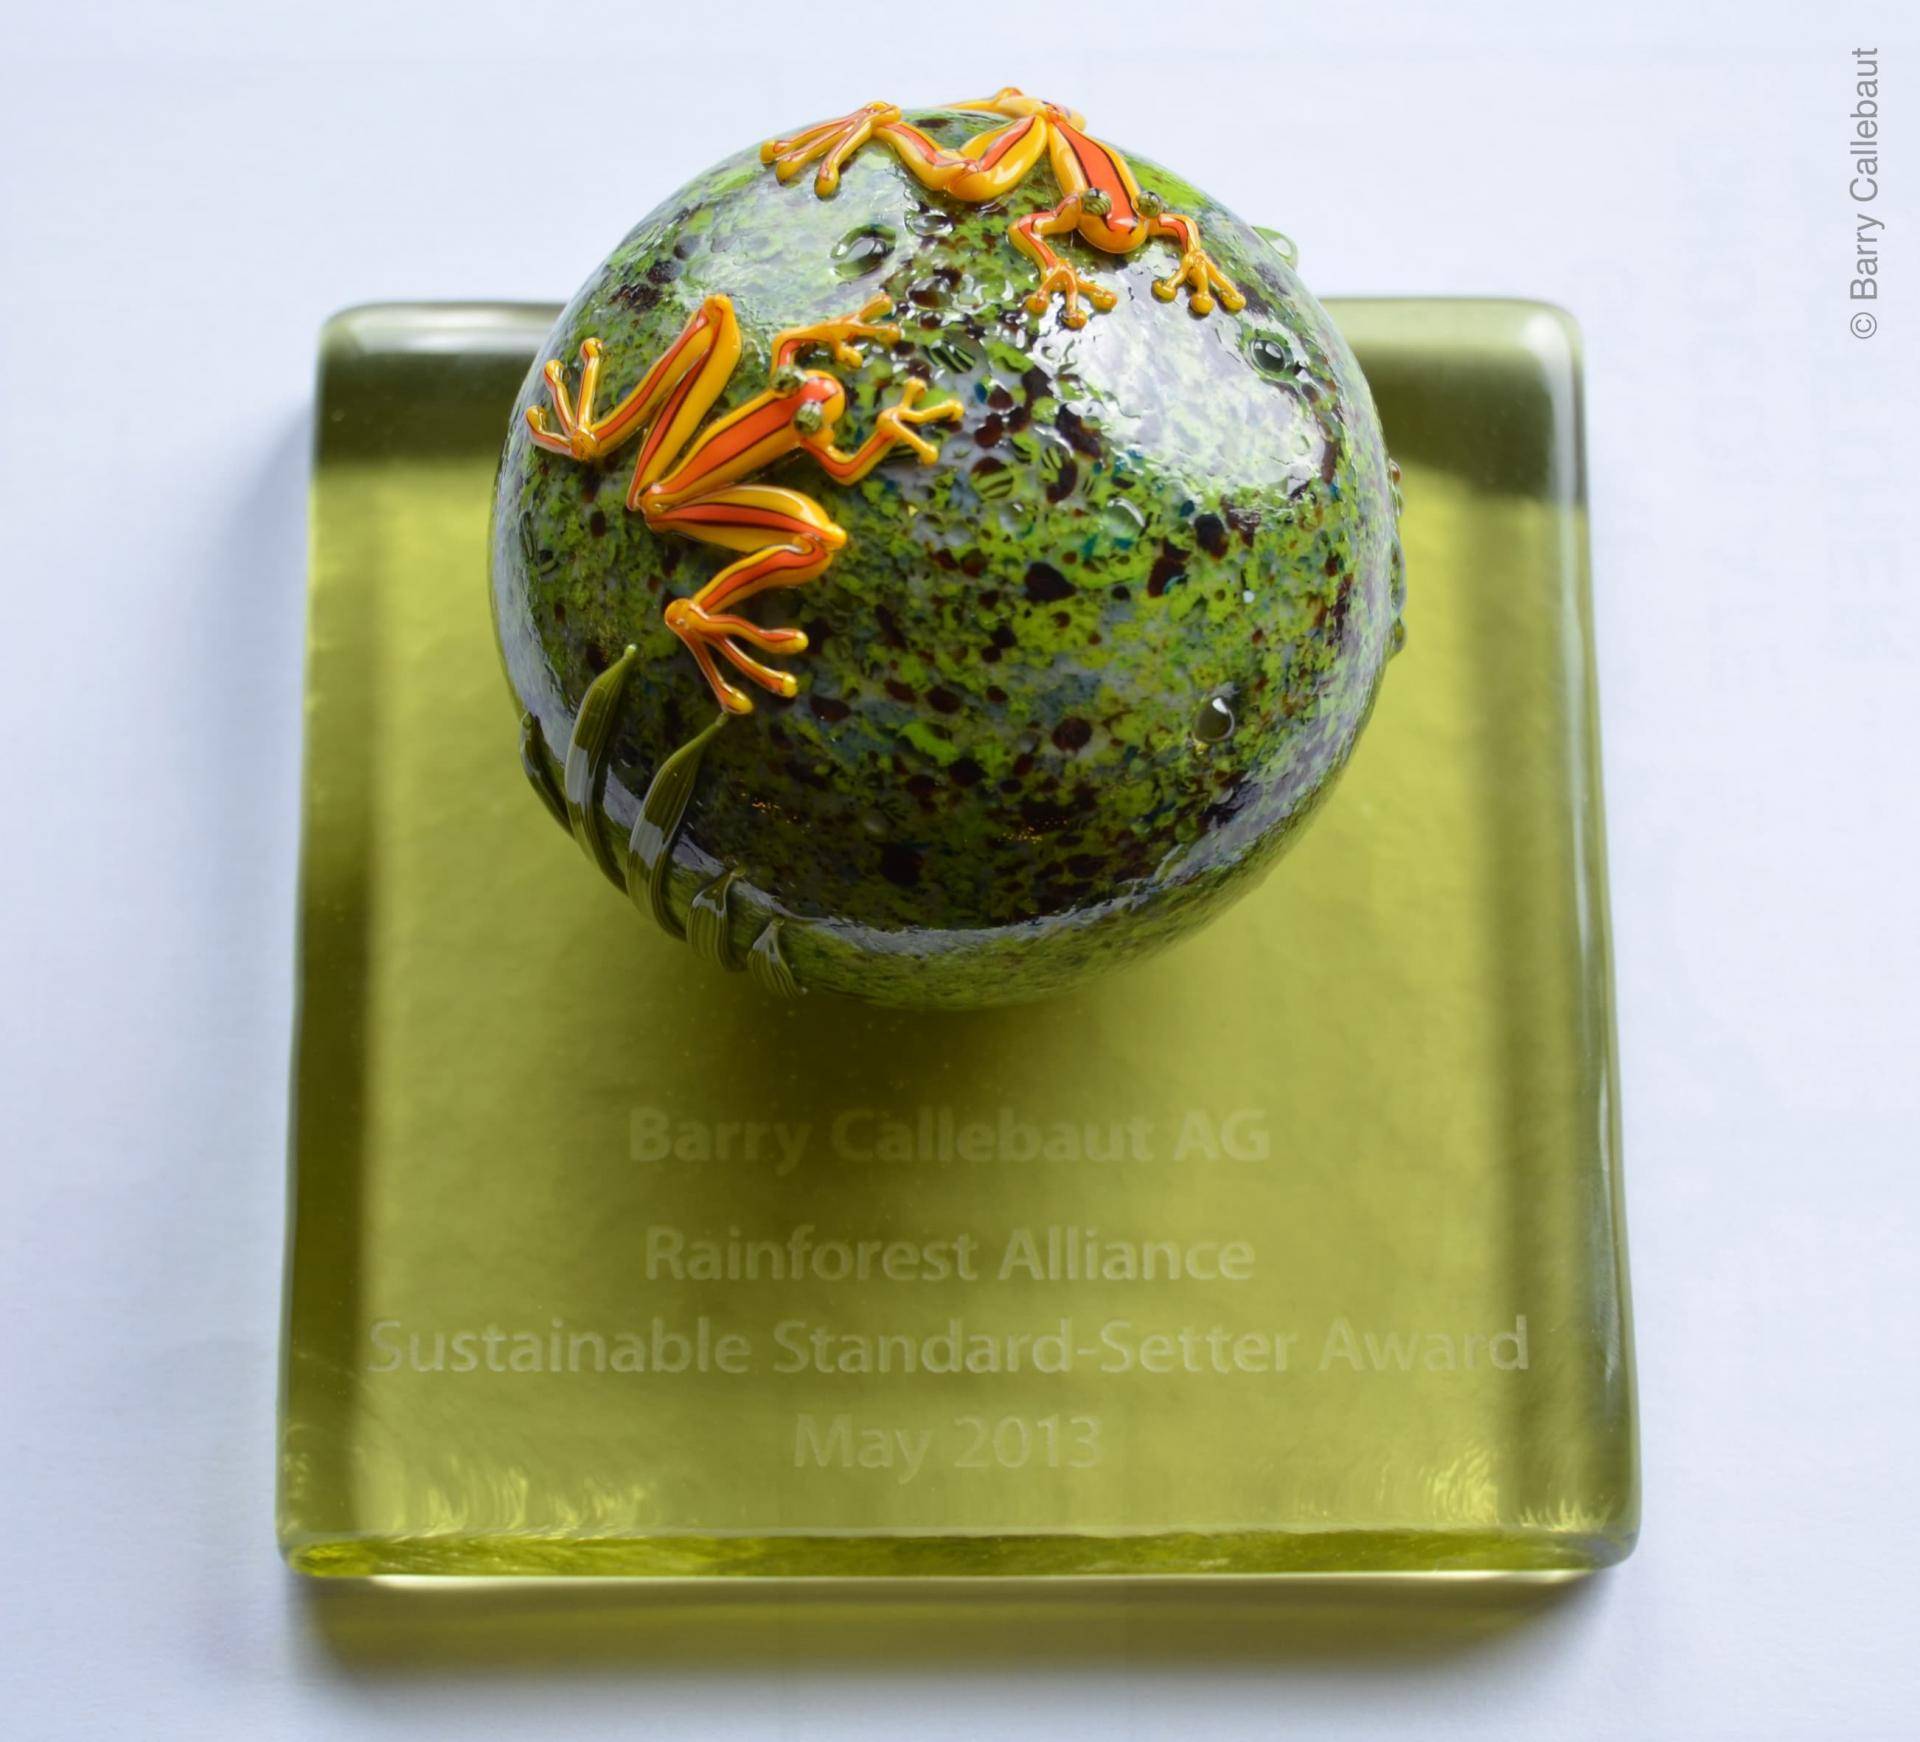 Rainforest Alliance Sustainable Standard-Setter Award